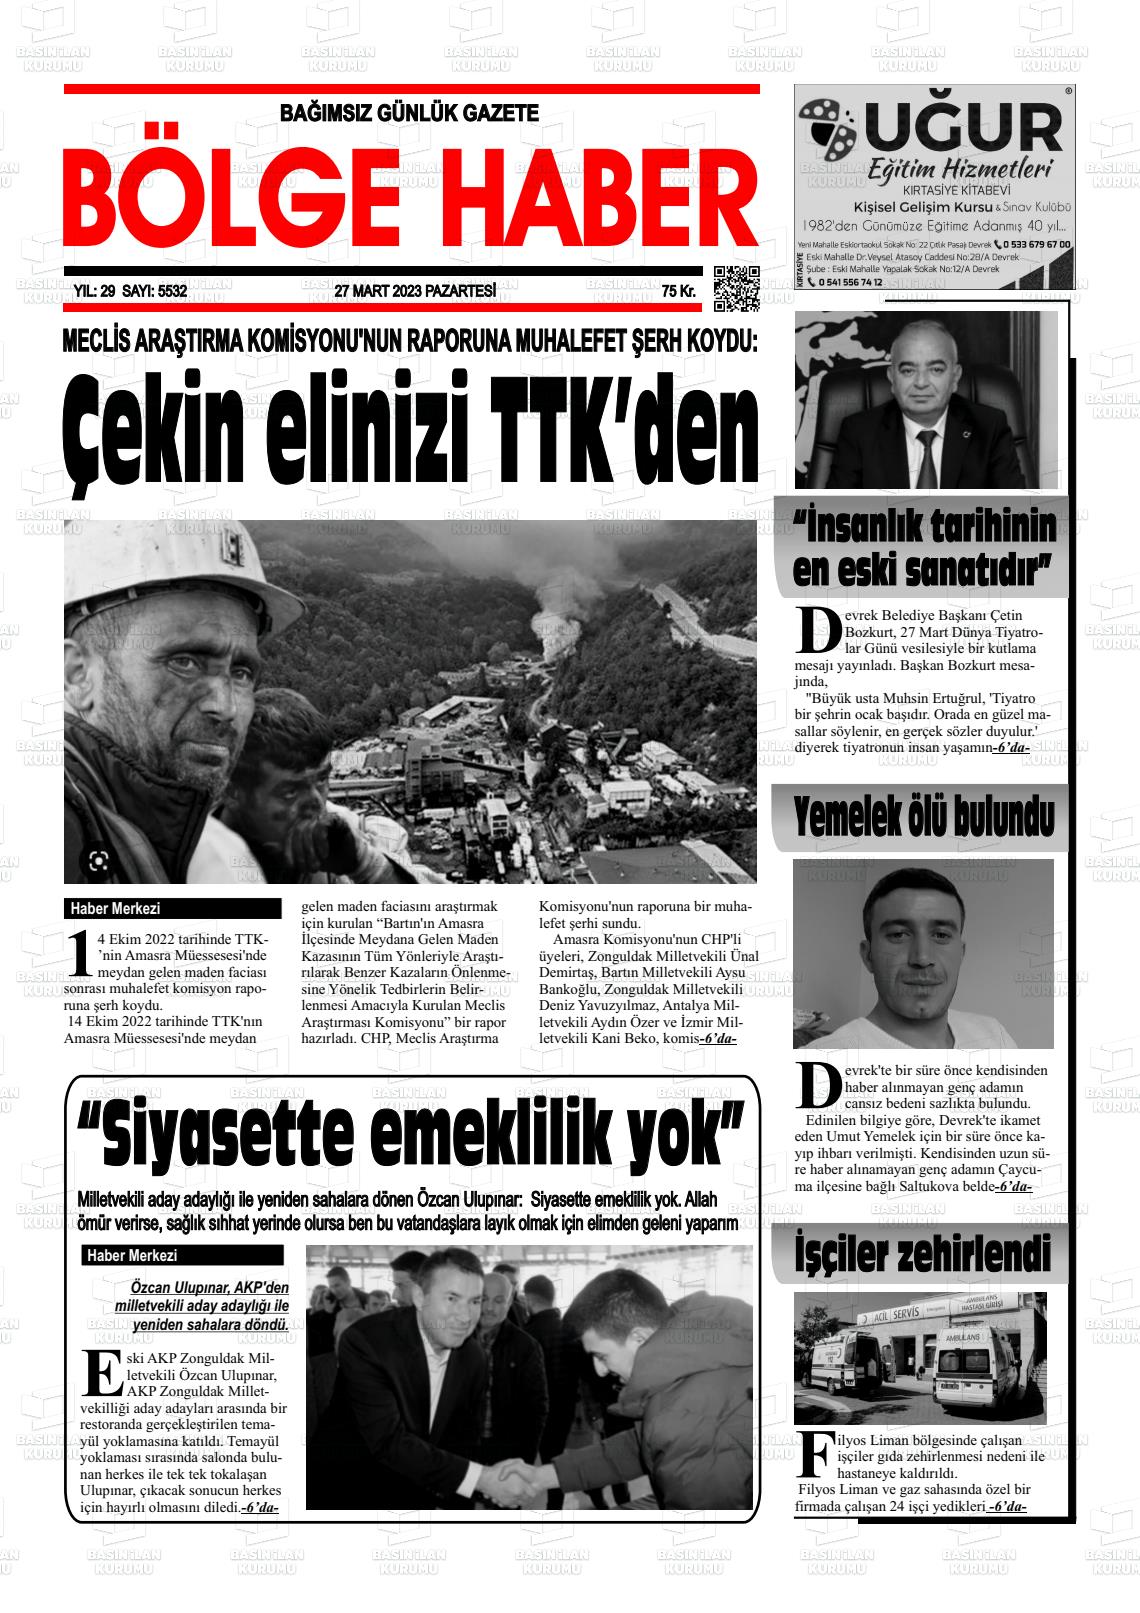 27 Mart 2023 Devrek Bölge Haber Gazete Manşeti